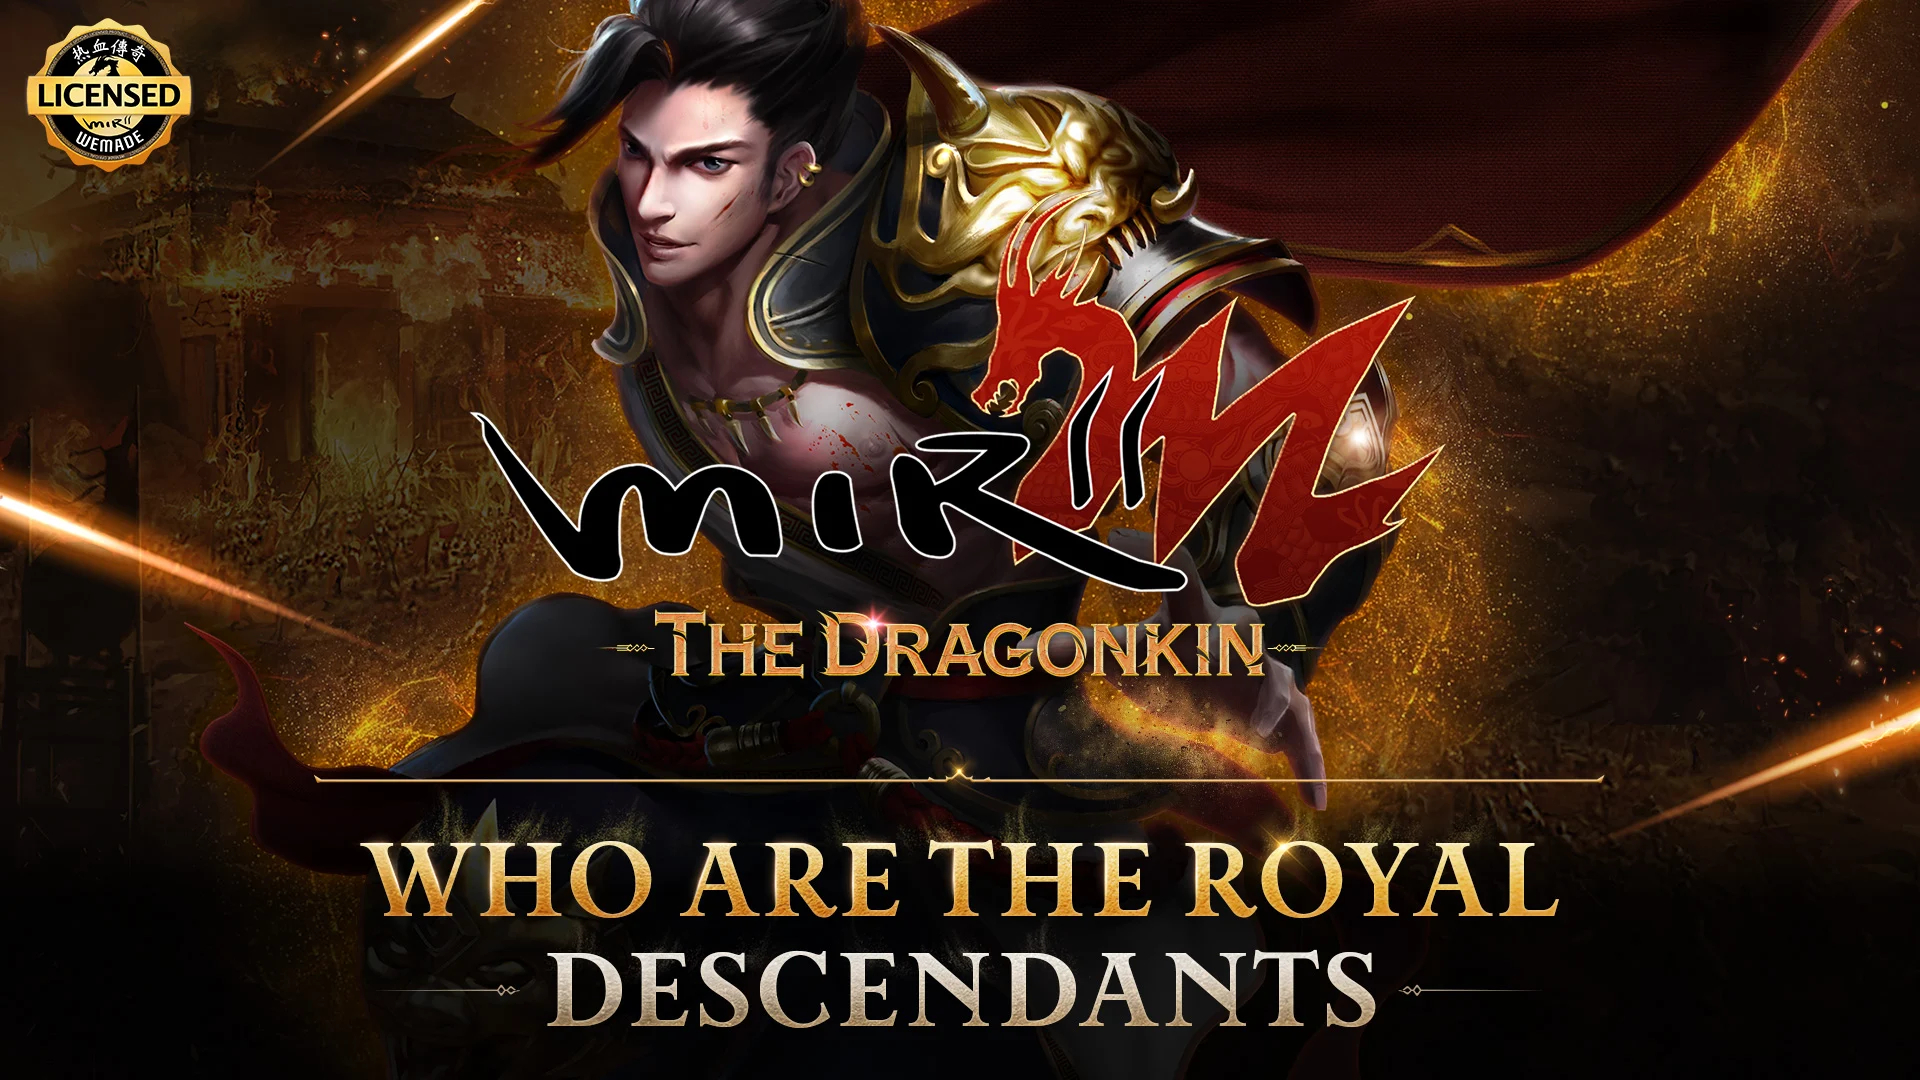 MIR2M : The Dragonkin on PC